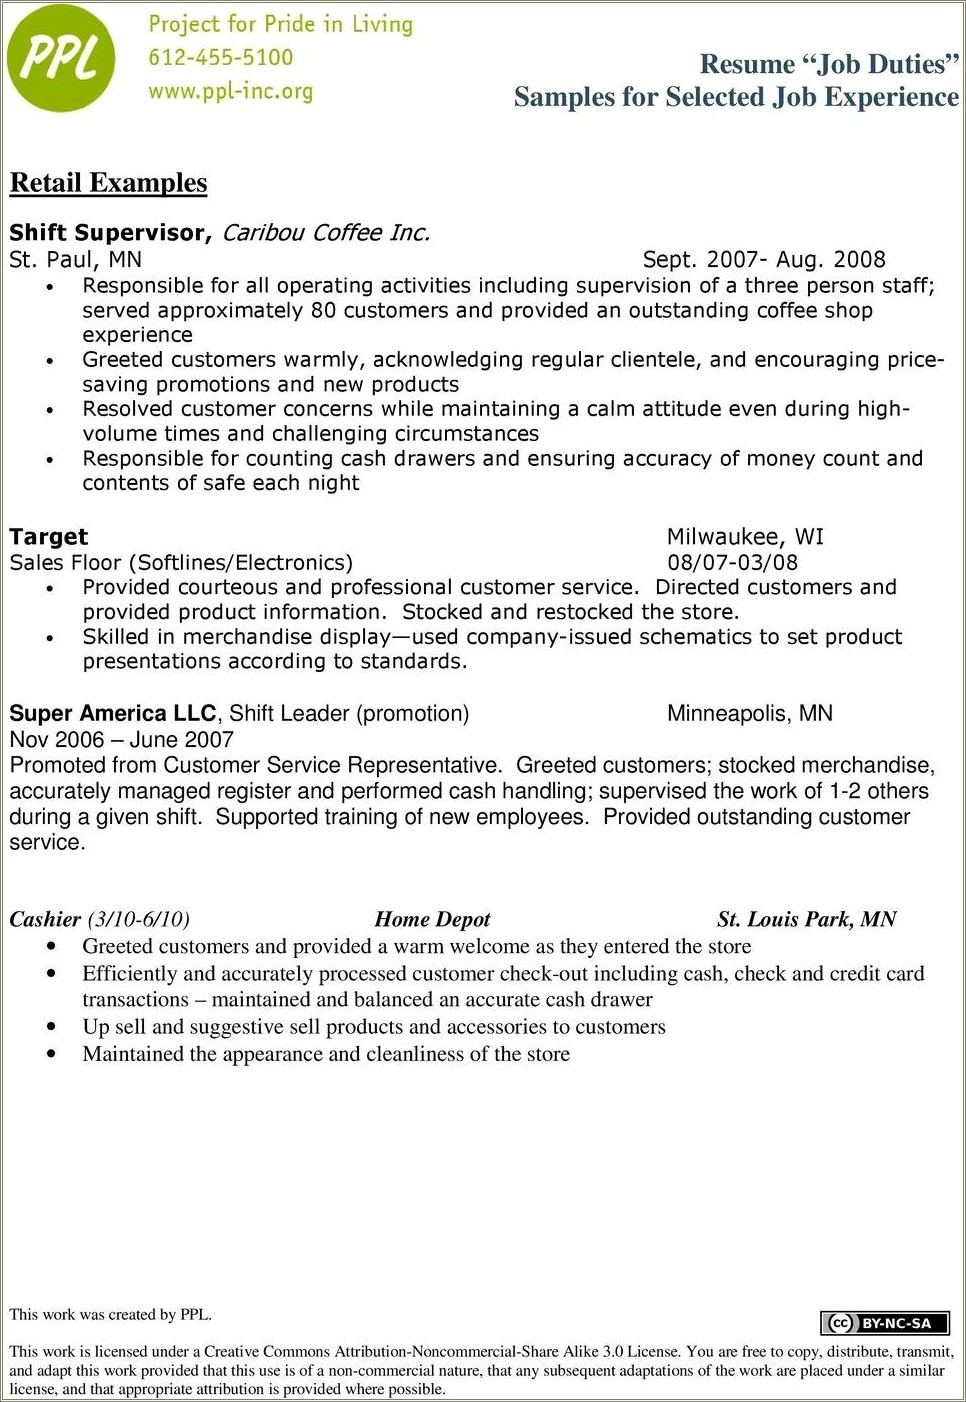 Retail Shift Leader Job Description For Resume